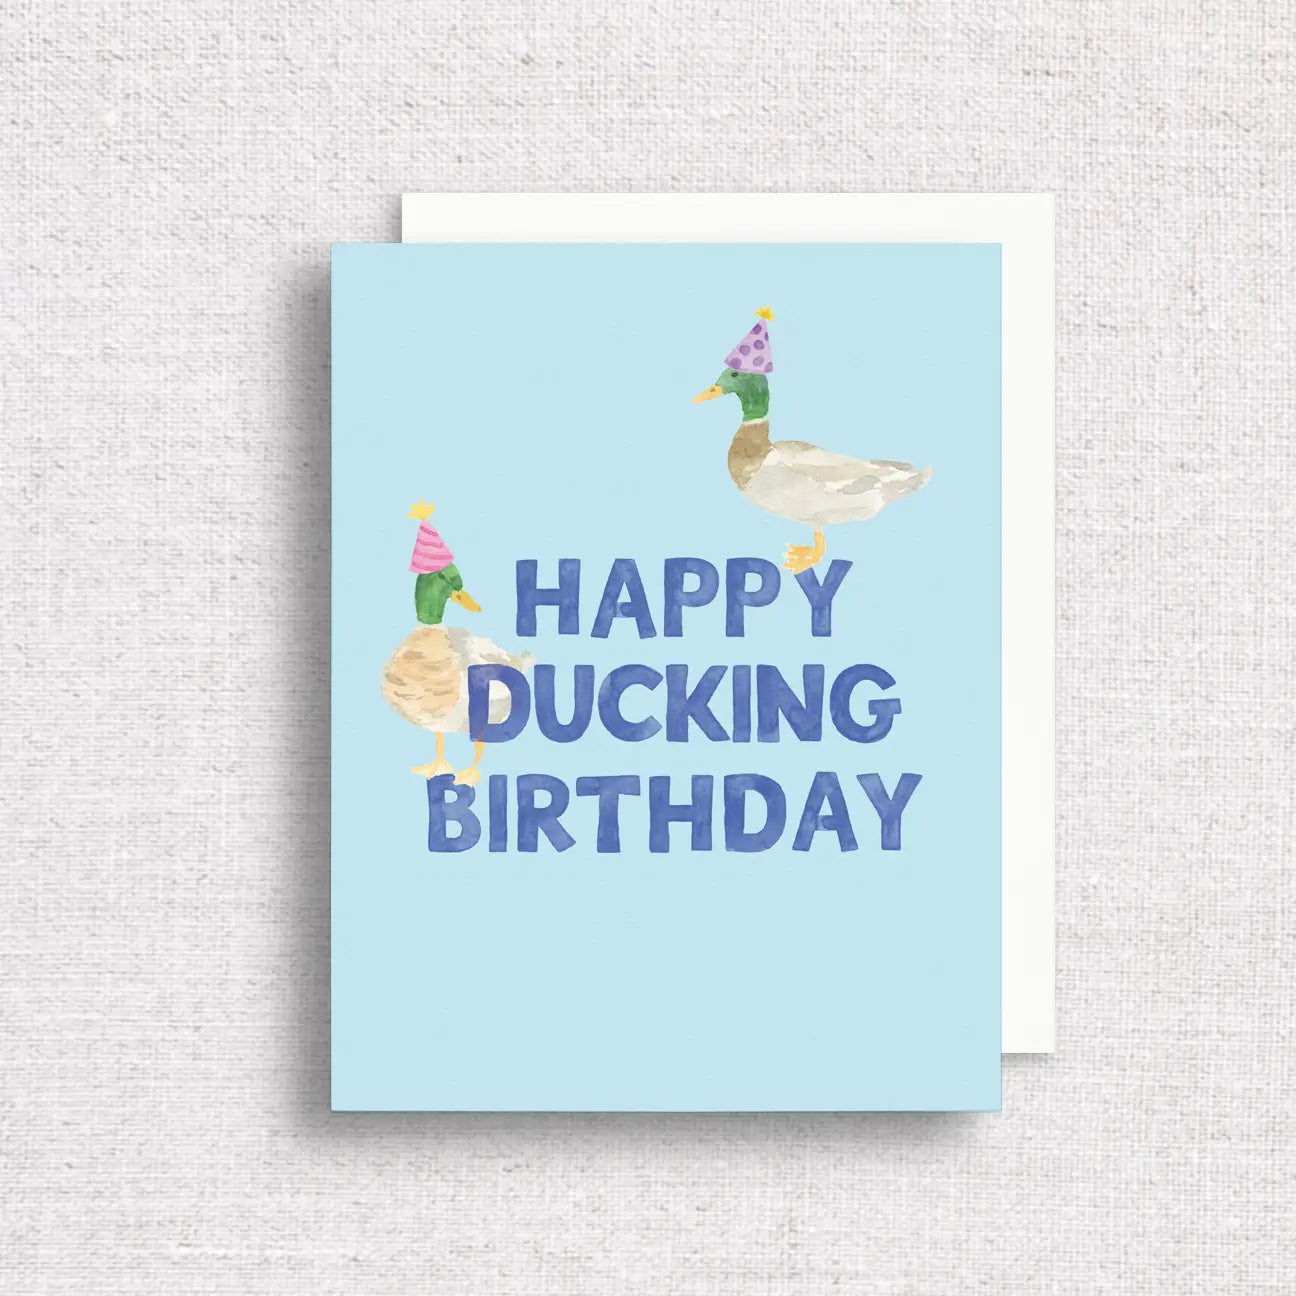 Happy Ducking Birthday Greeting Card